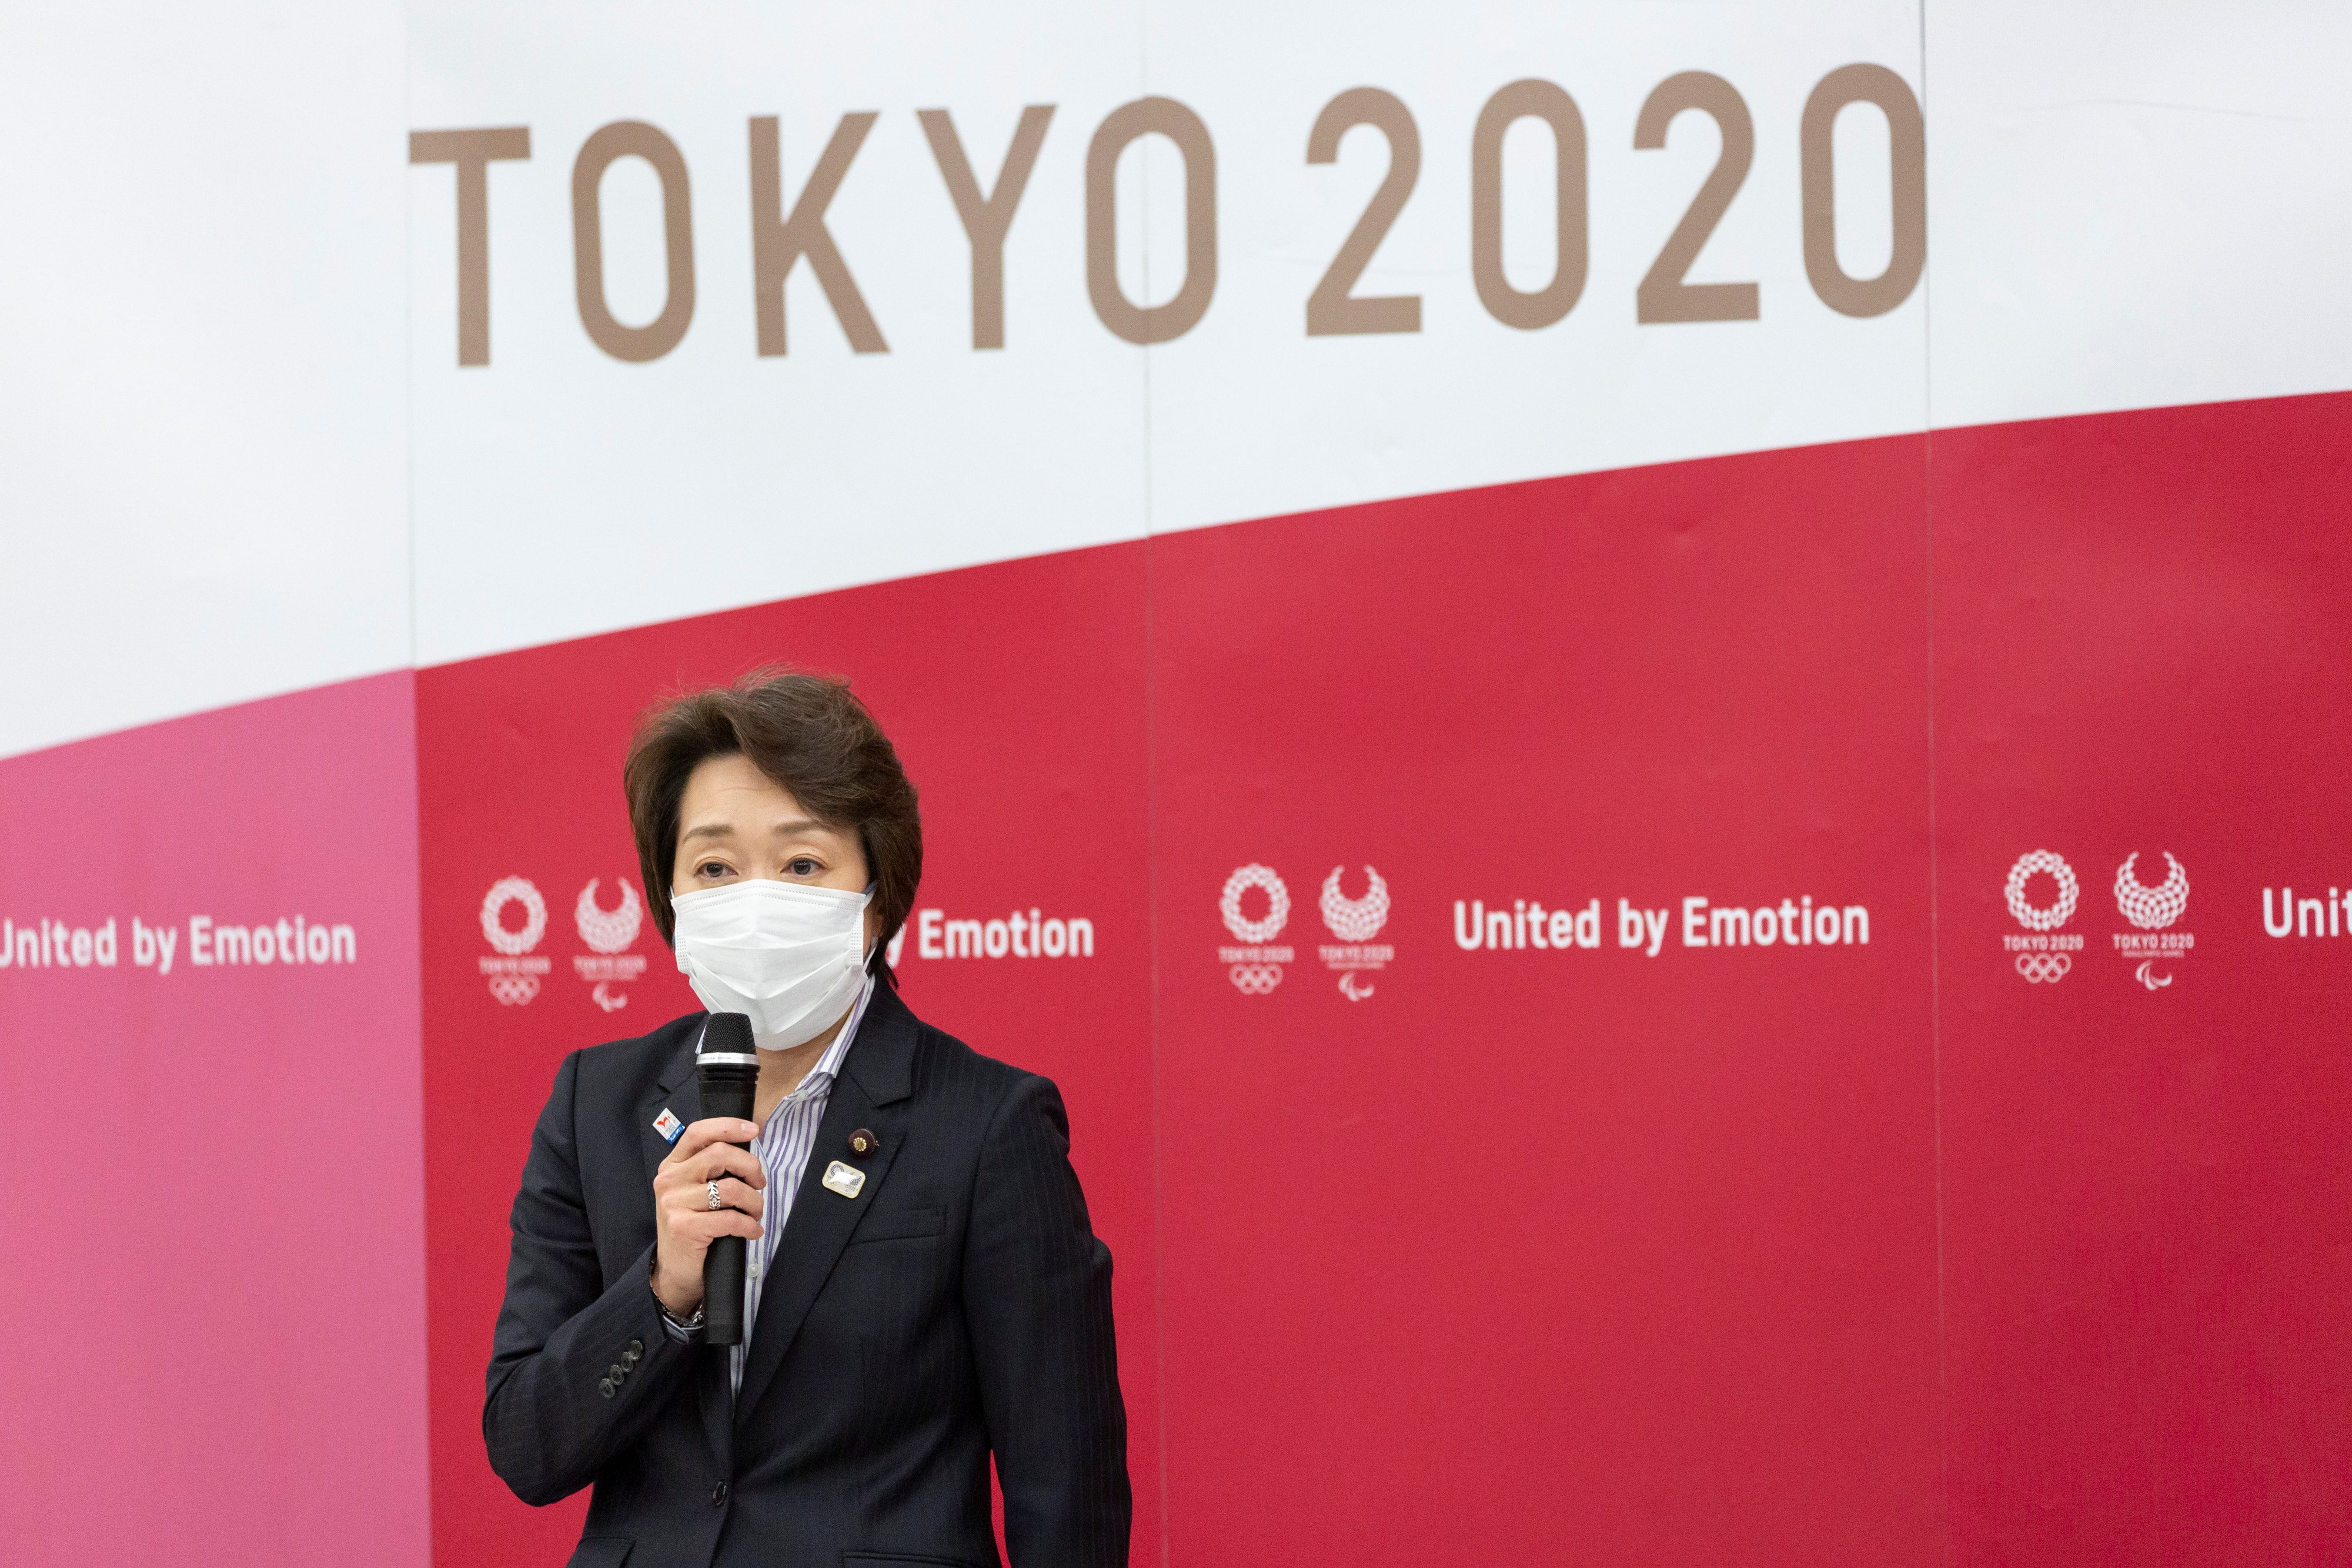 Woman athlete and former Olympian Hashimoto chosen as Tokyo 2020 president